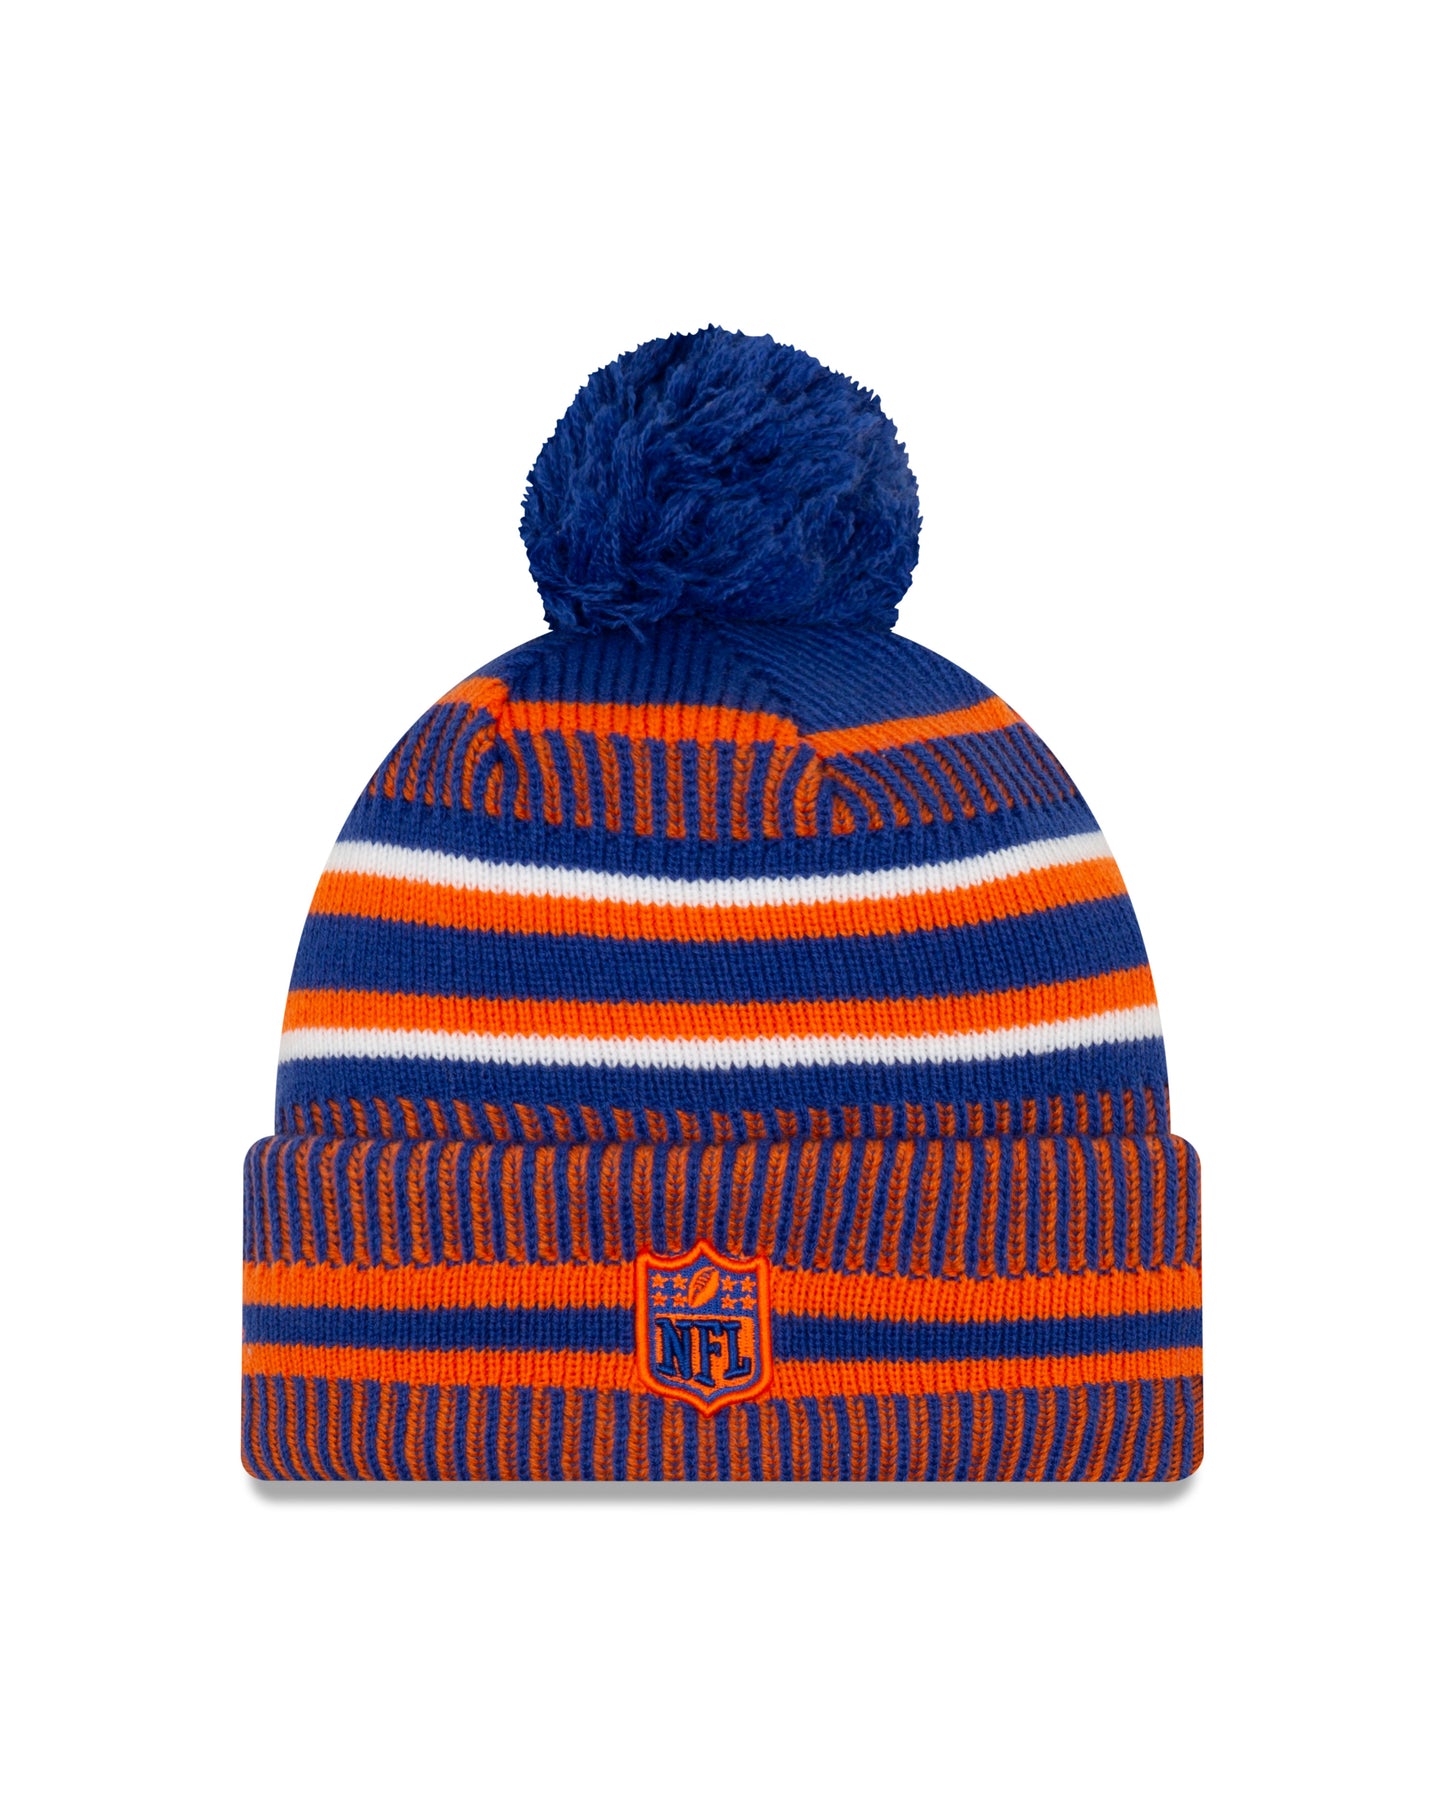 Denver Broncos New Era Sideline Sport Cuffed Pom Knit Hat- Blue